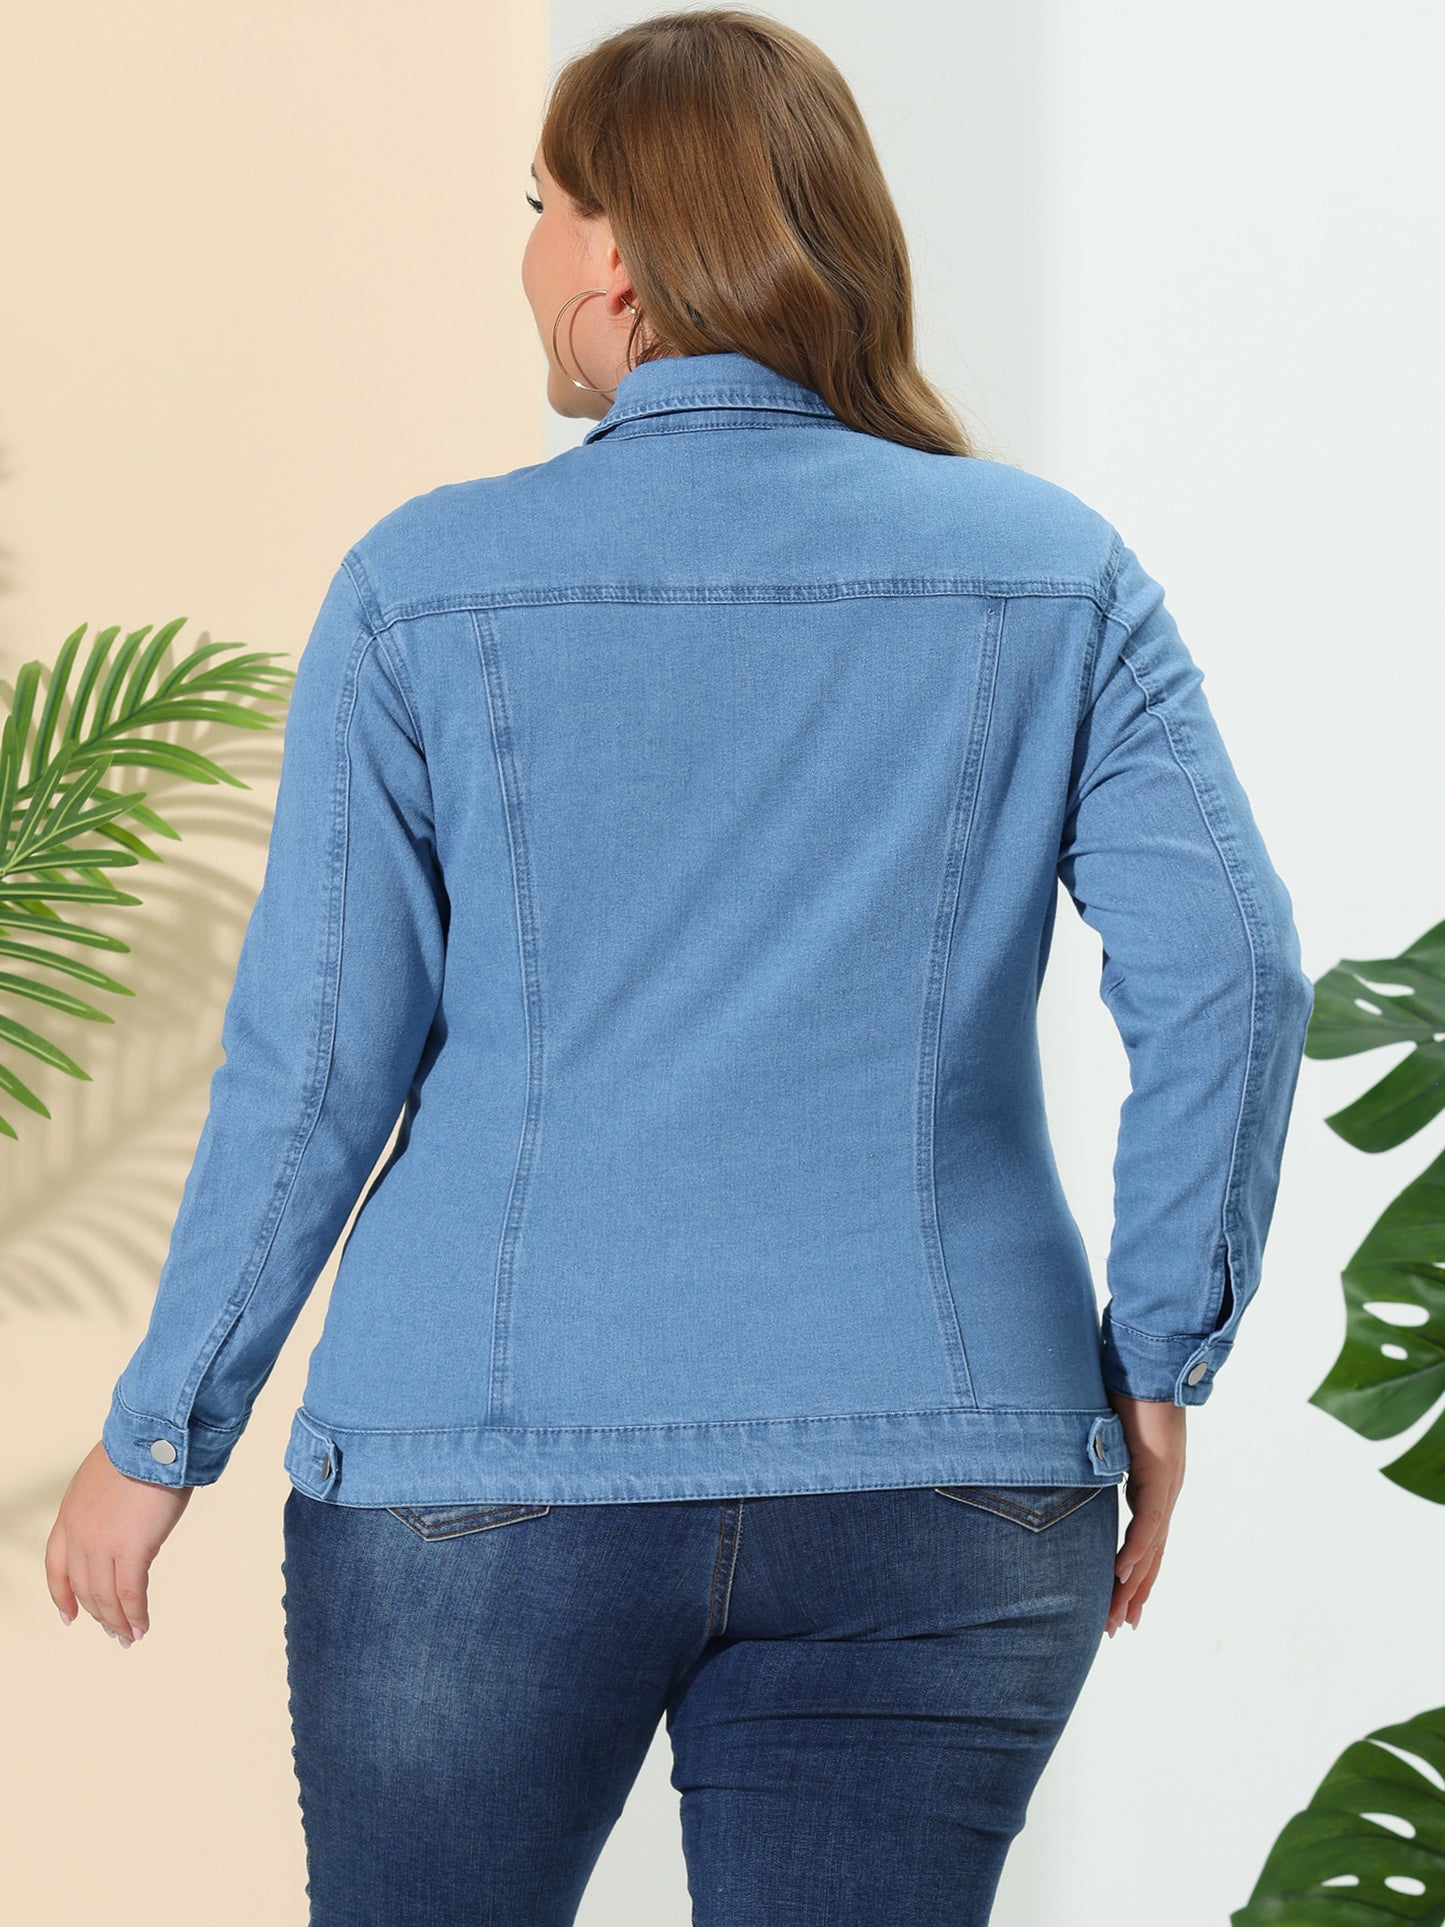 Agnes Orinda Plus Size Stitching Button Front Washed Denim Jacket Vintage Blue